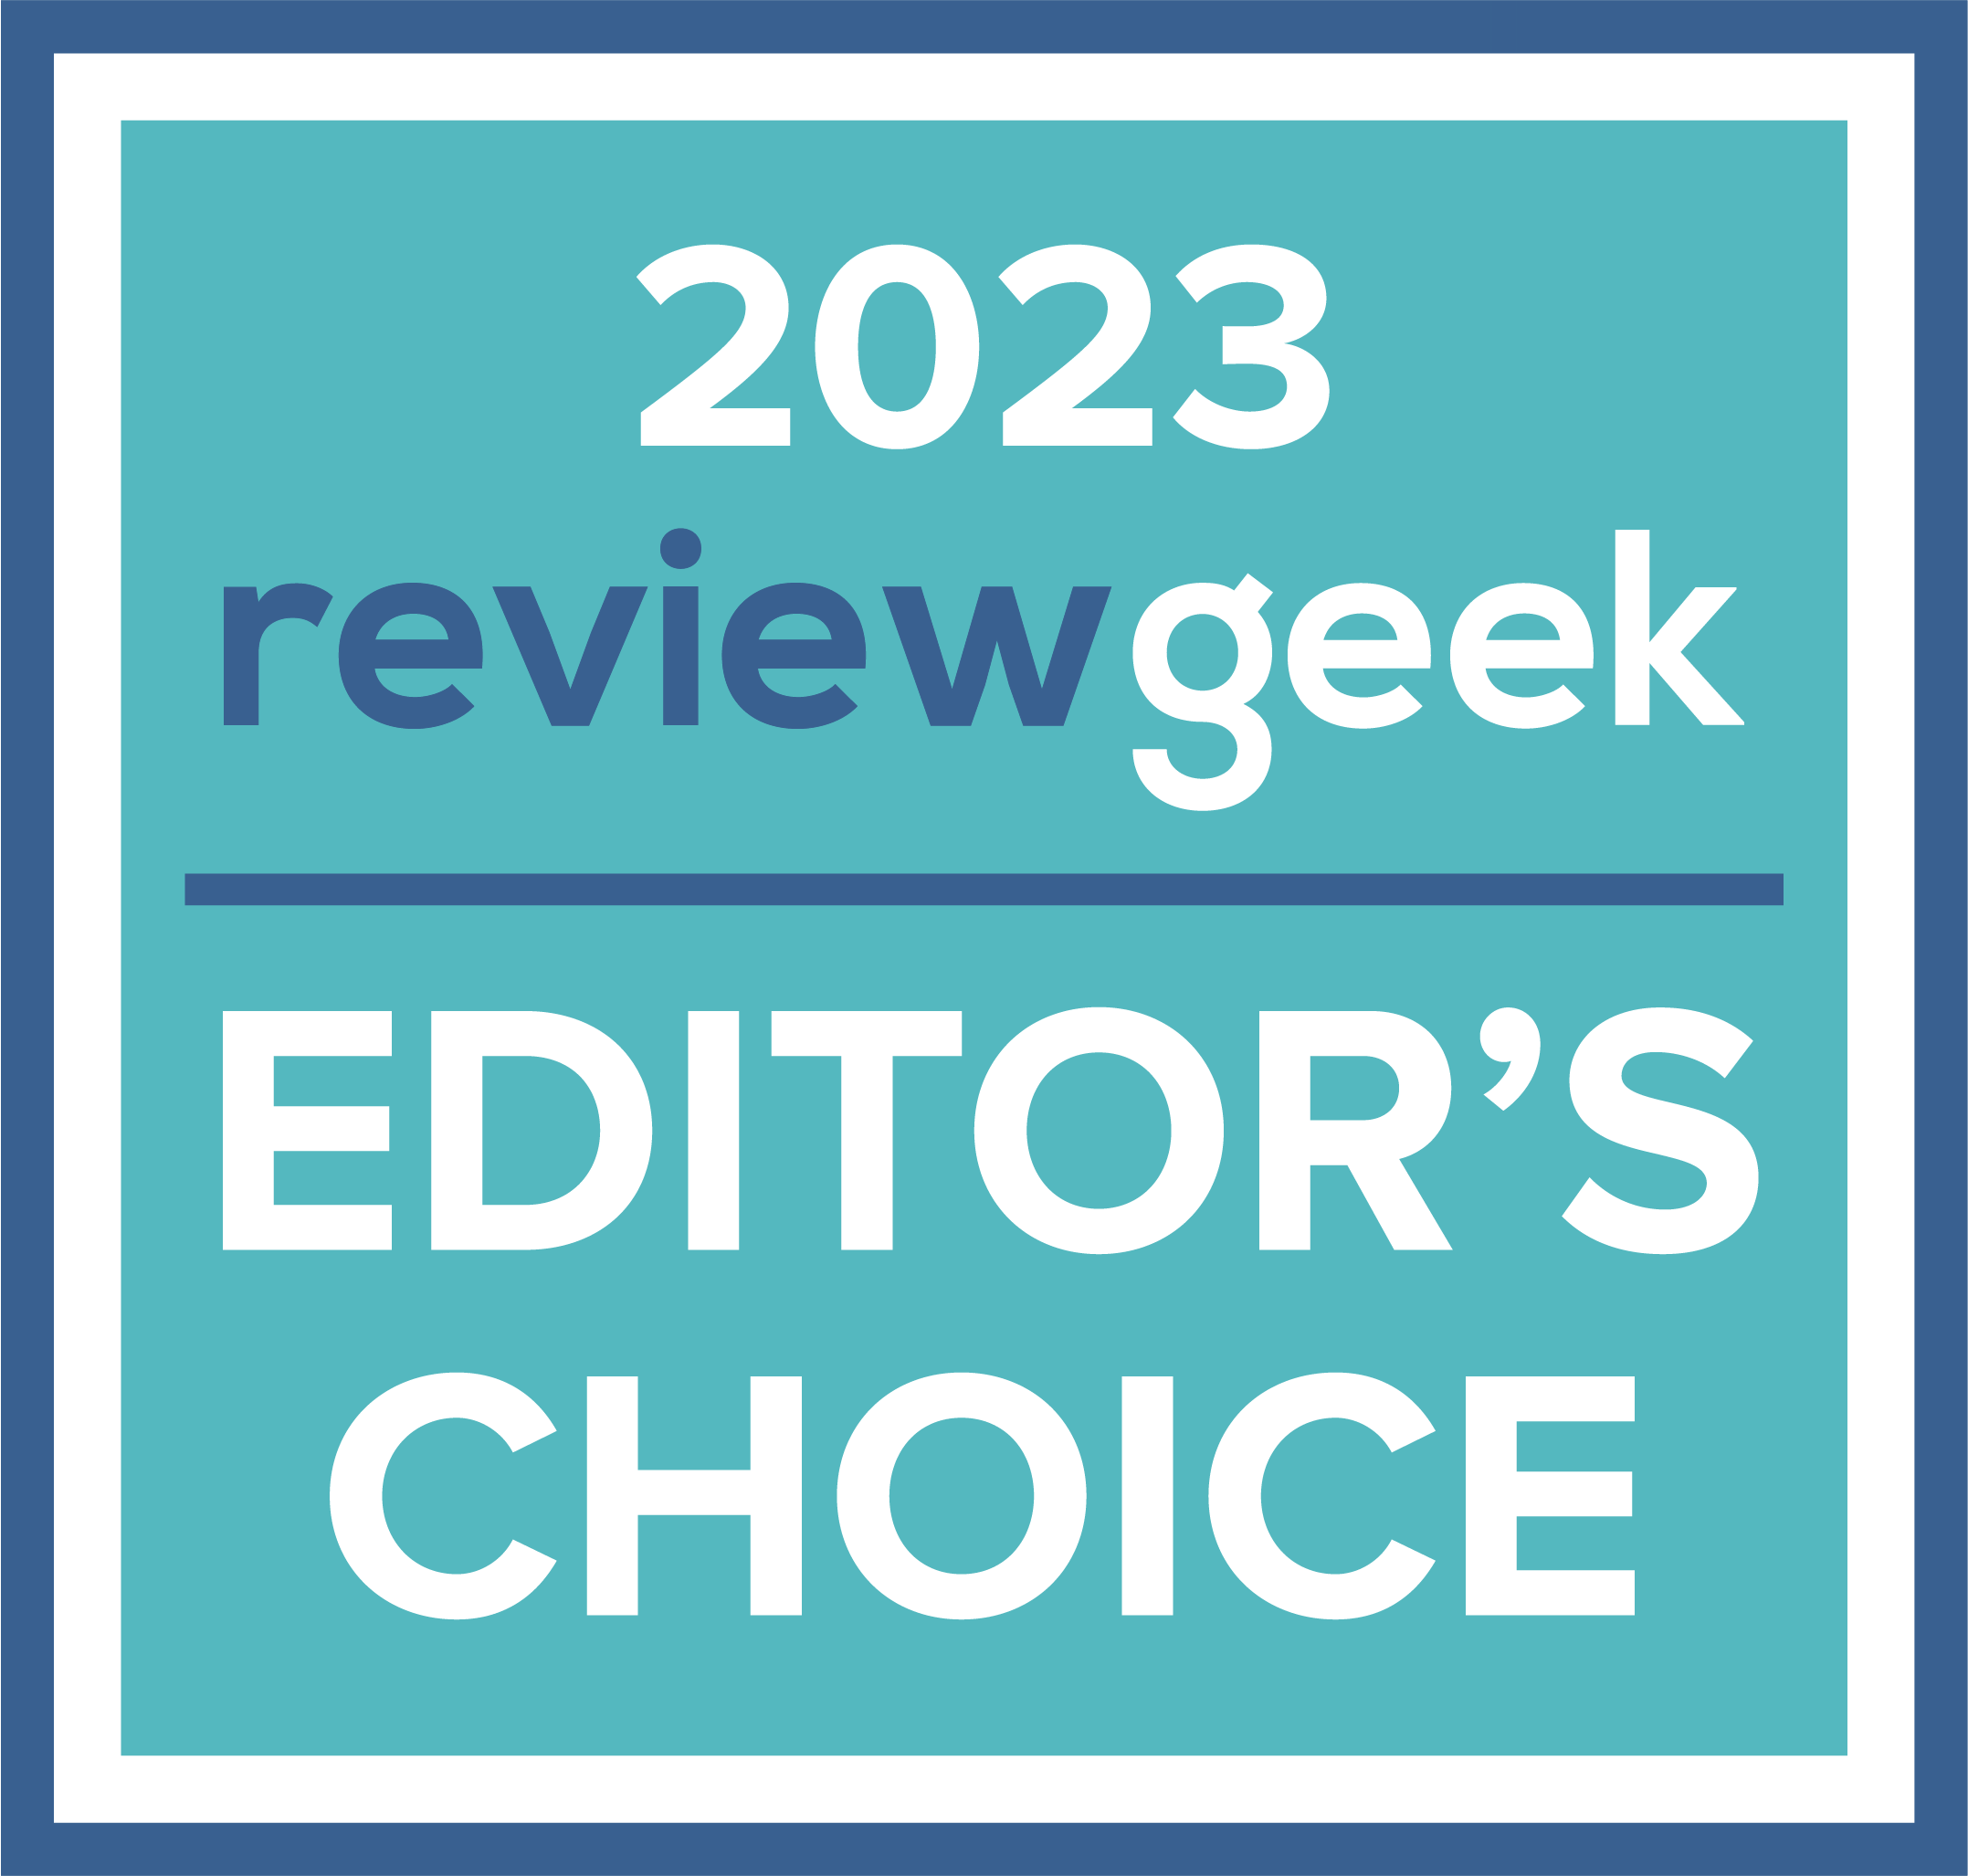 How-to Geek Editor Choice Badge Award